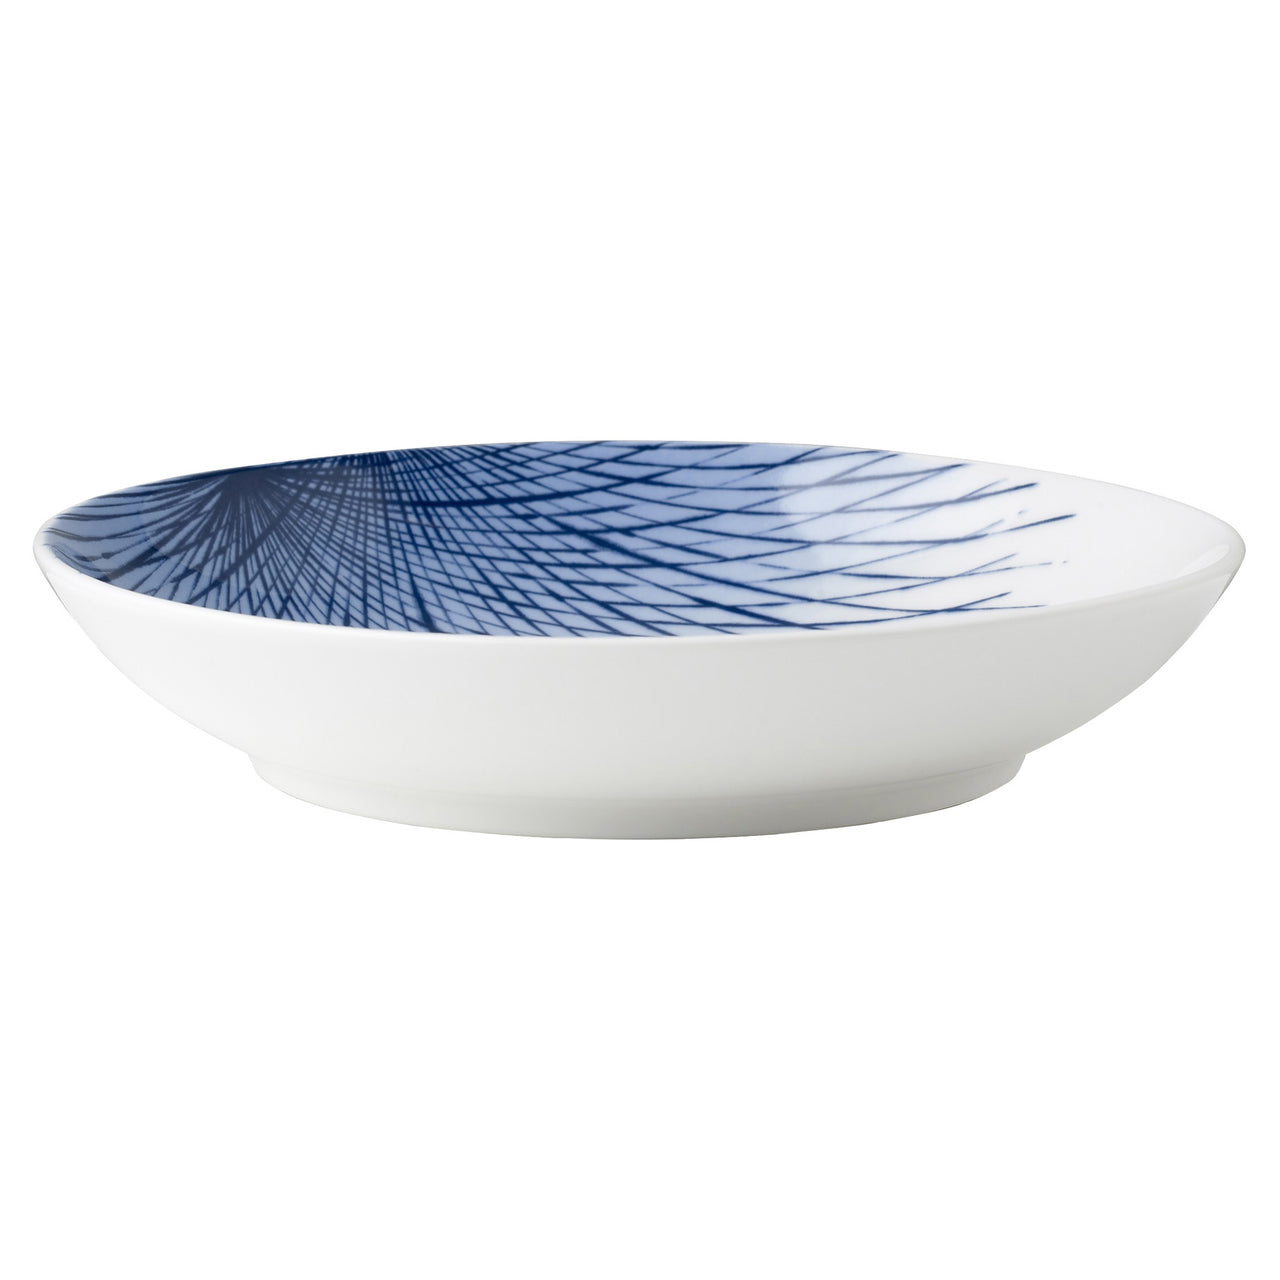 Hanabi 23cm Porcelain Pasta Bowls (Set of 4)